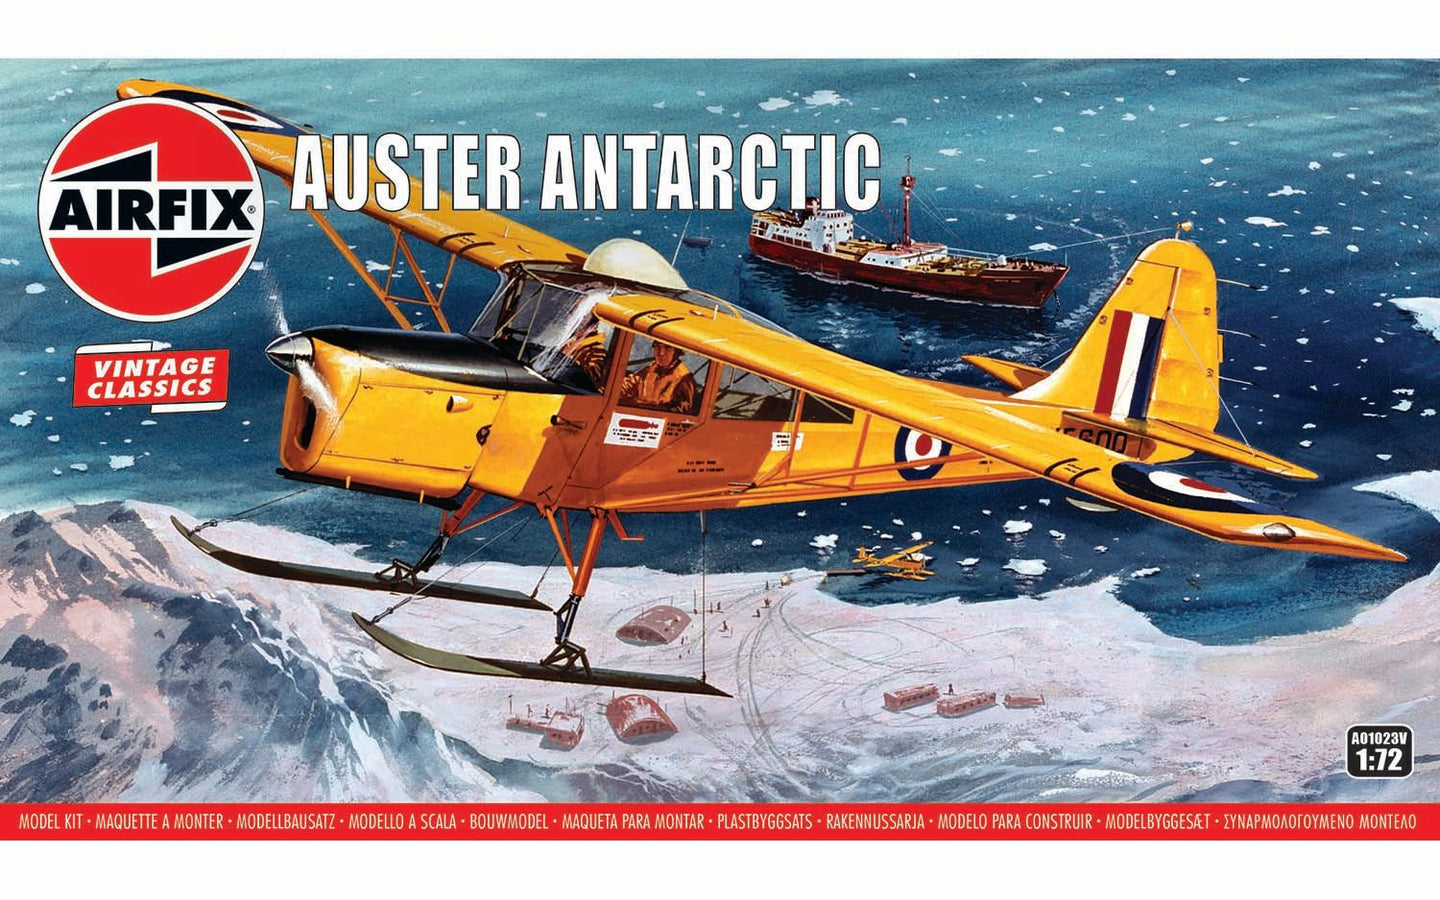 Airfix 1/72 British Auster Antarctic A01023V